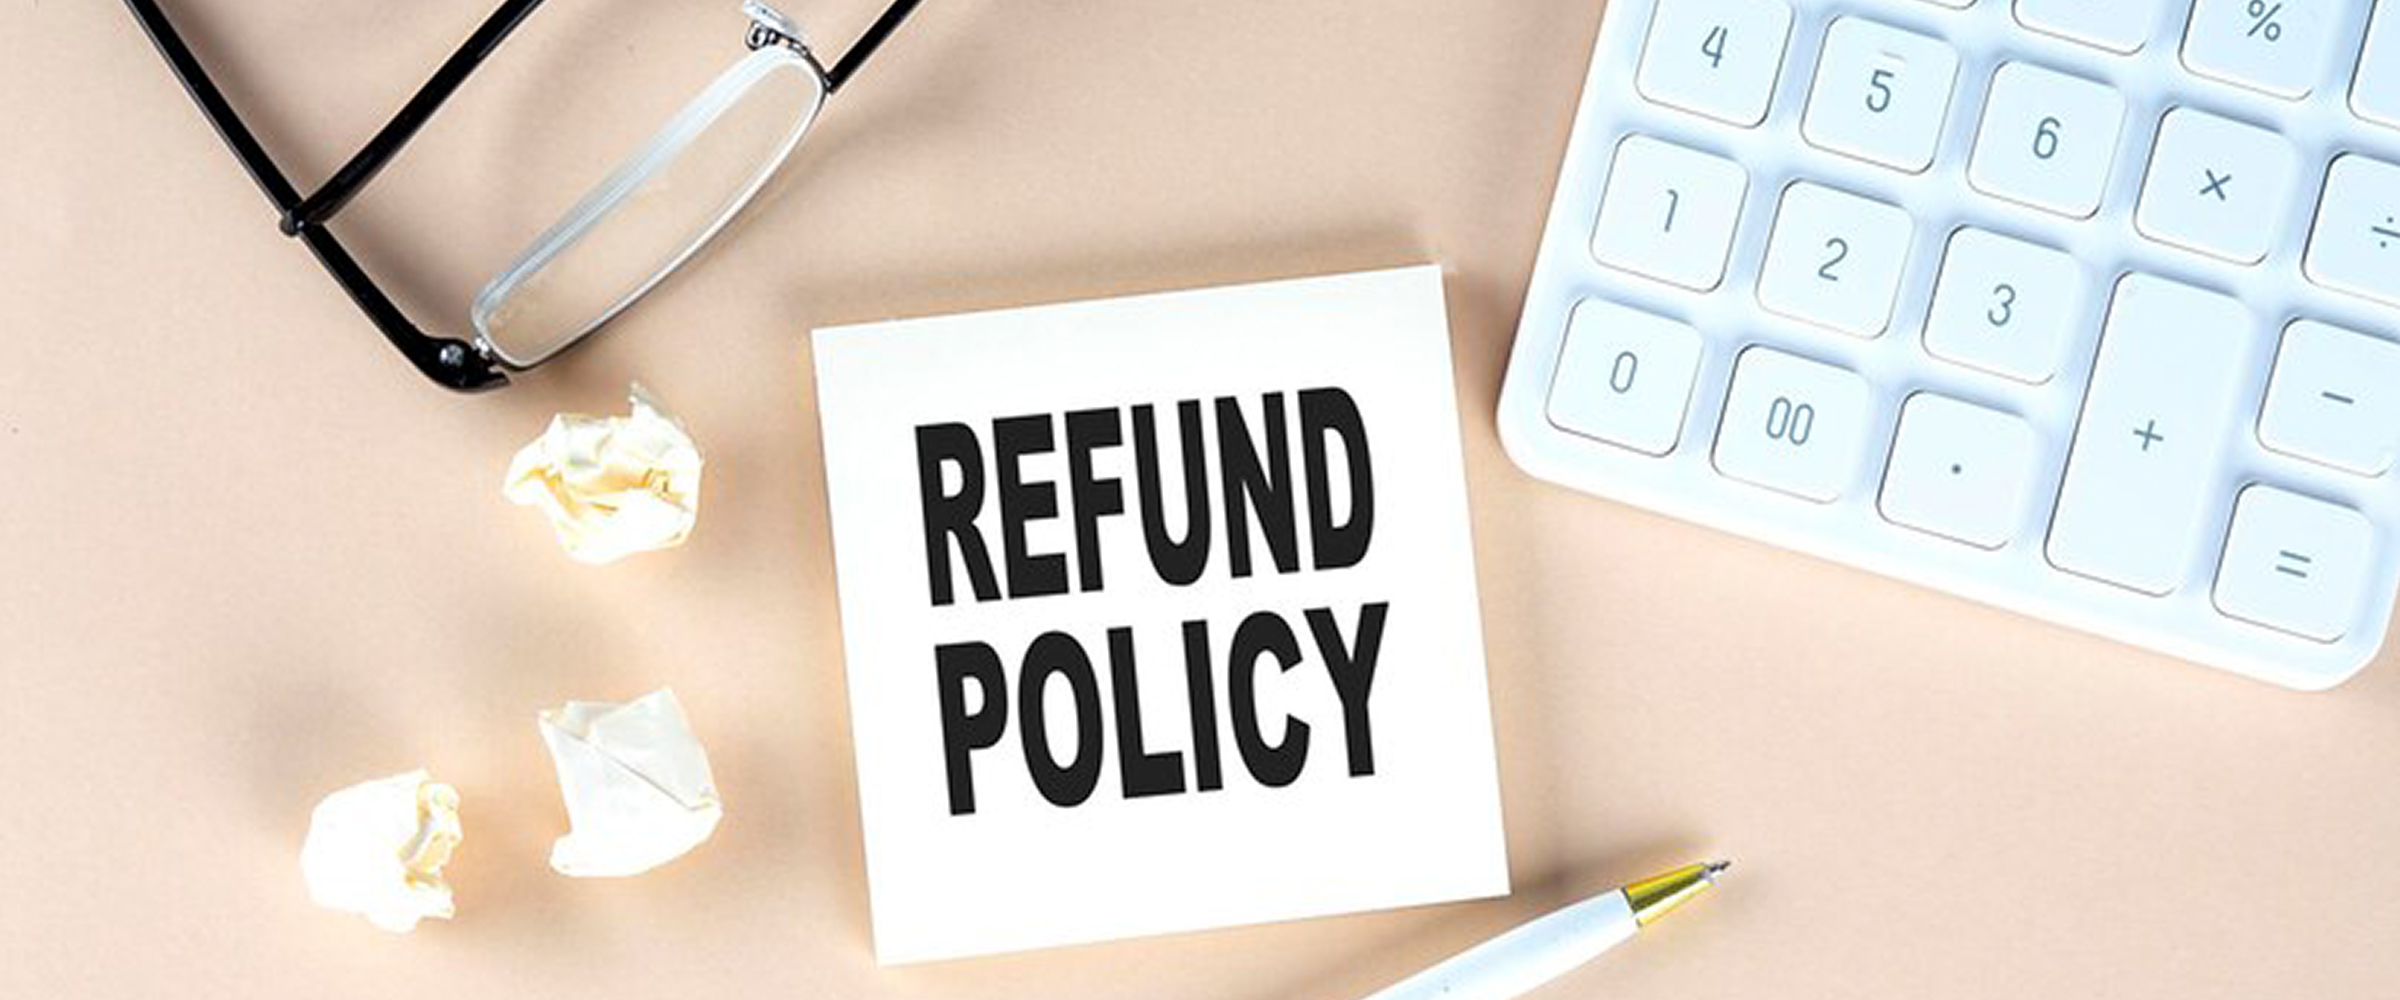 southwest refund policy